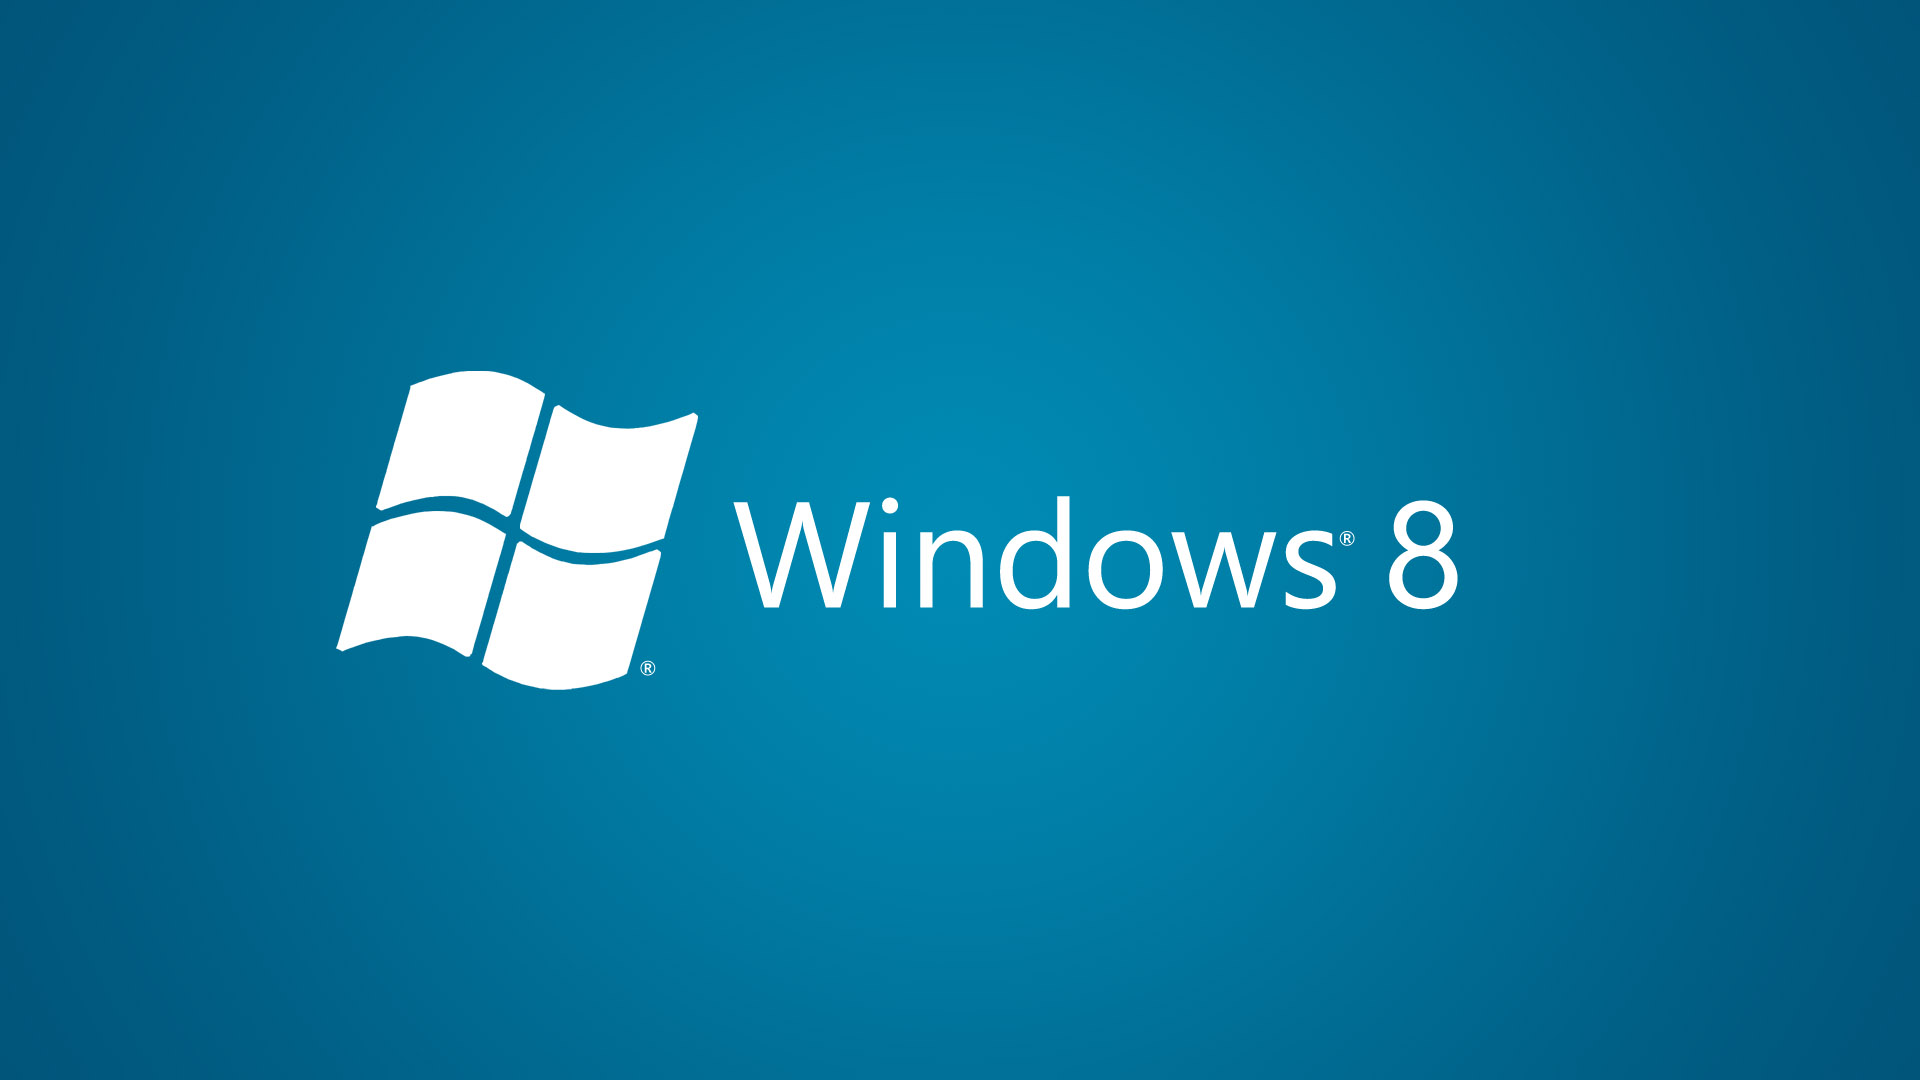 Windows Puters Logo Wallpaper